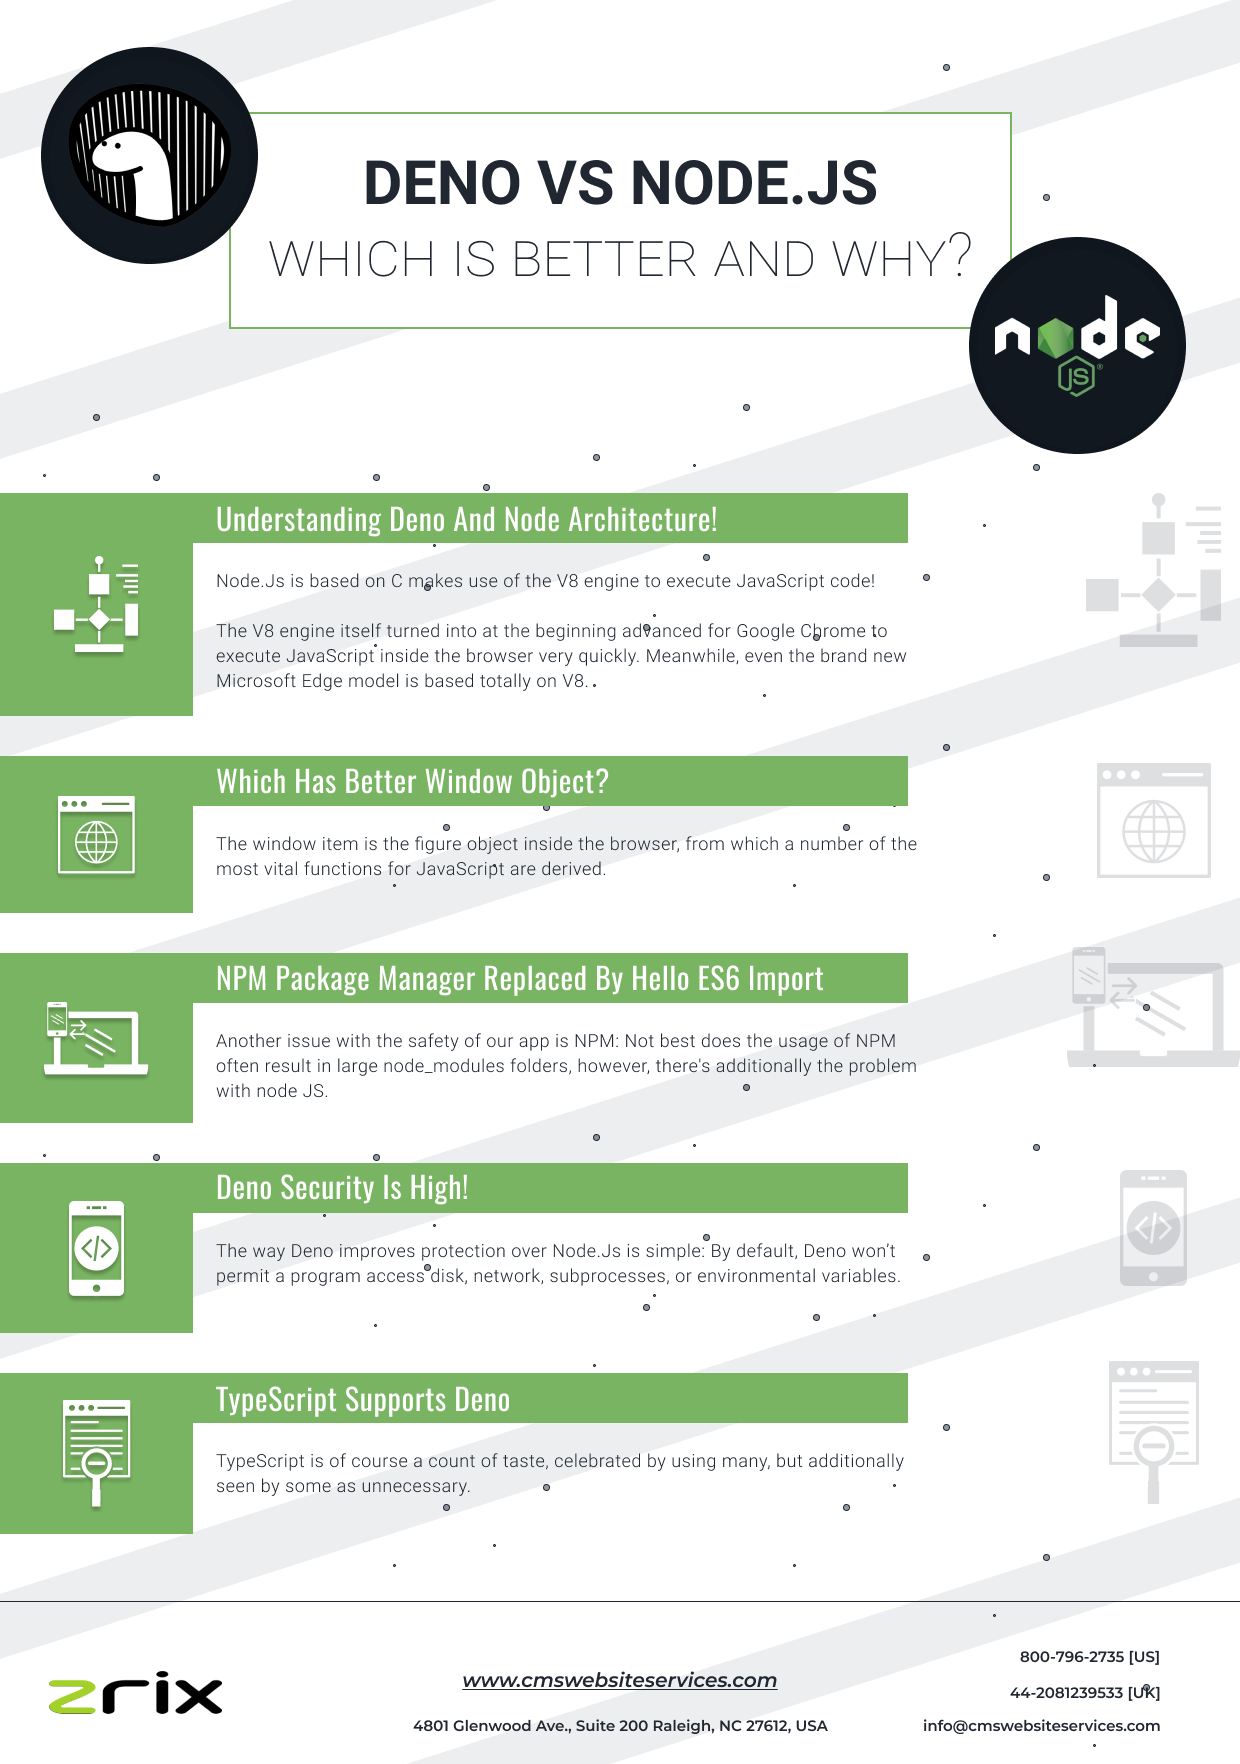 deno vs node.js infographic